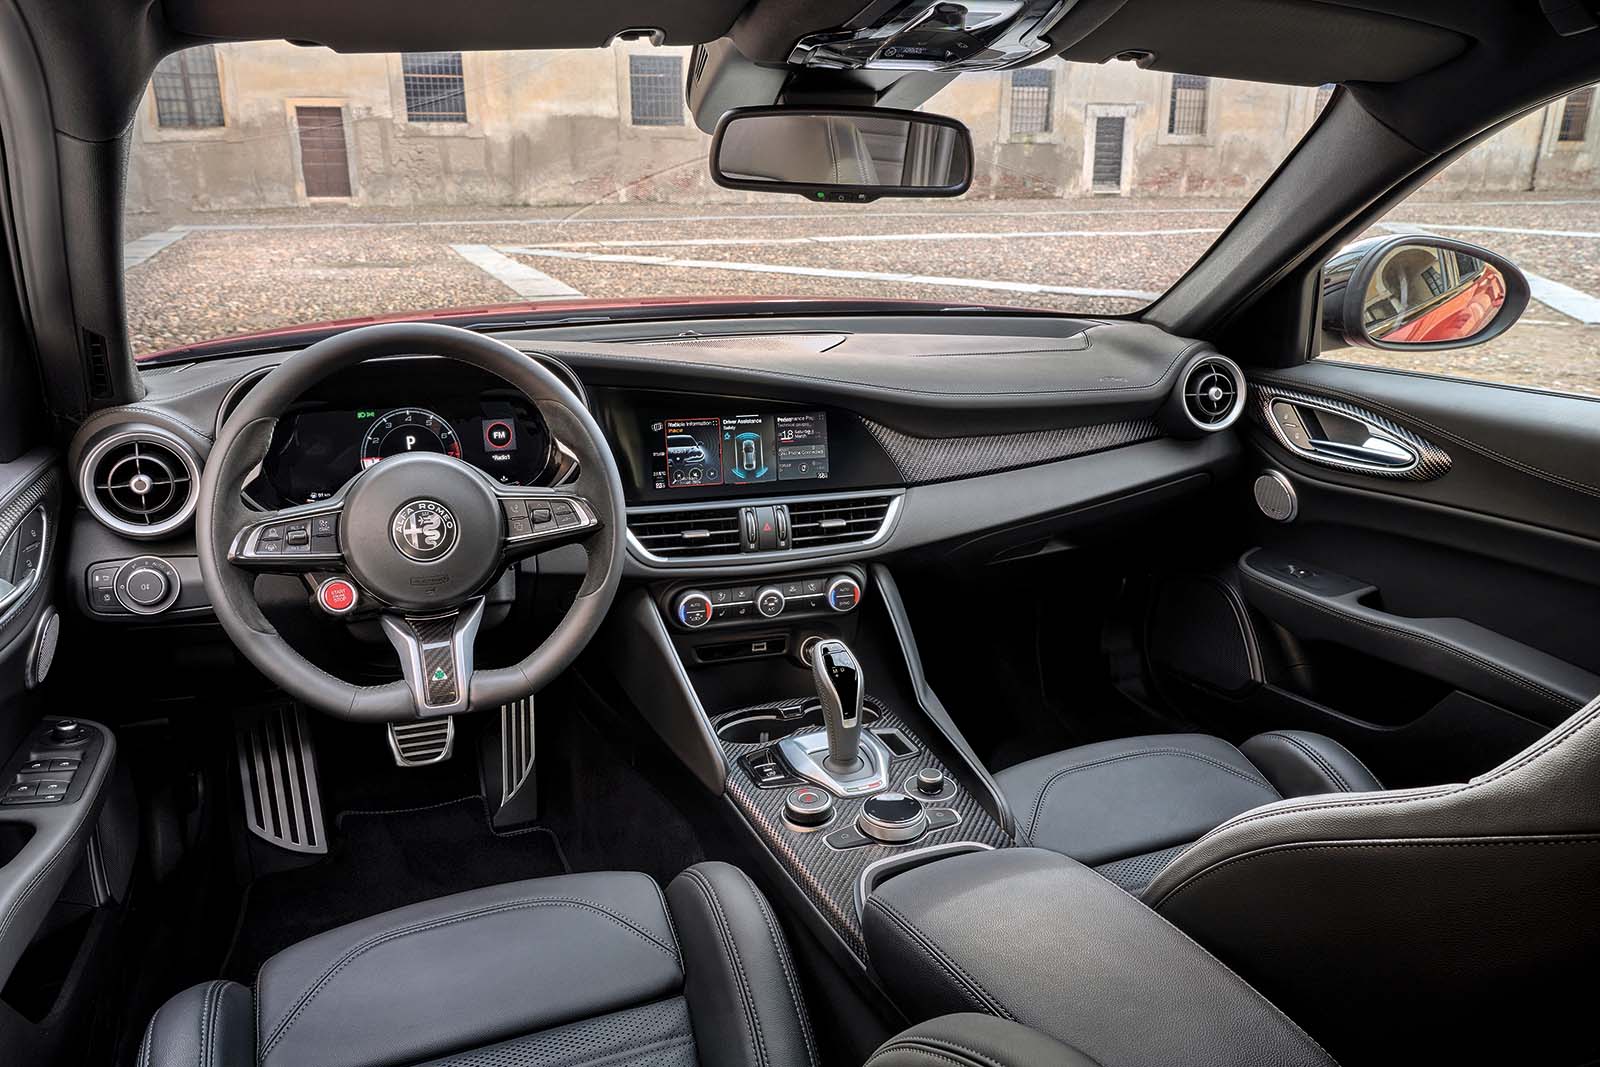 Alfa Romeo Giulietta Interior Layout and Technology